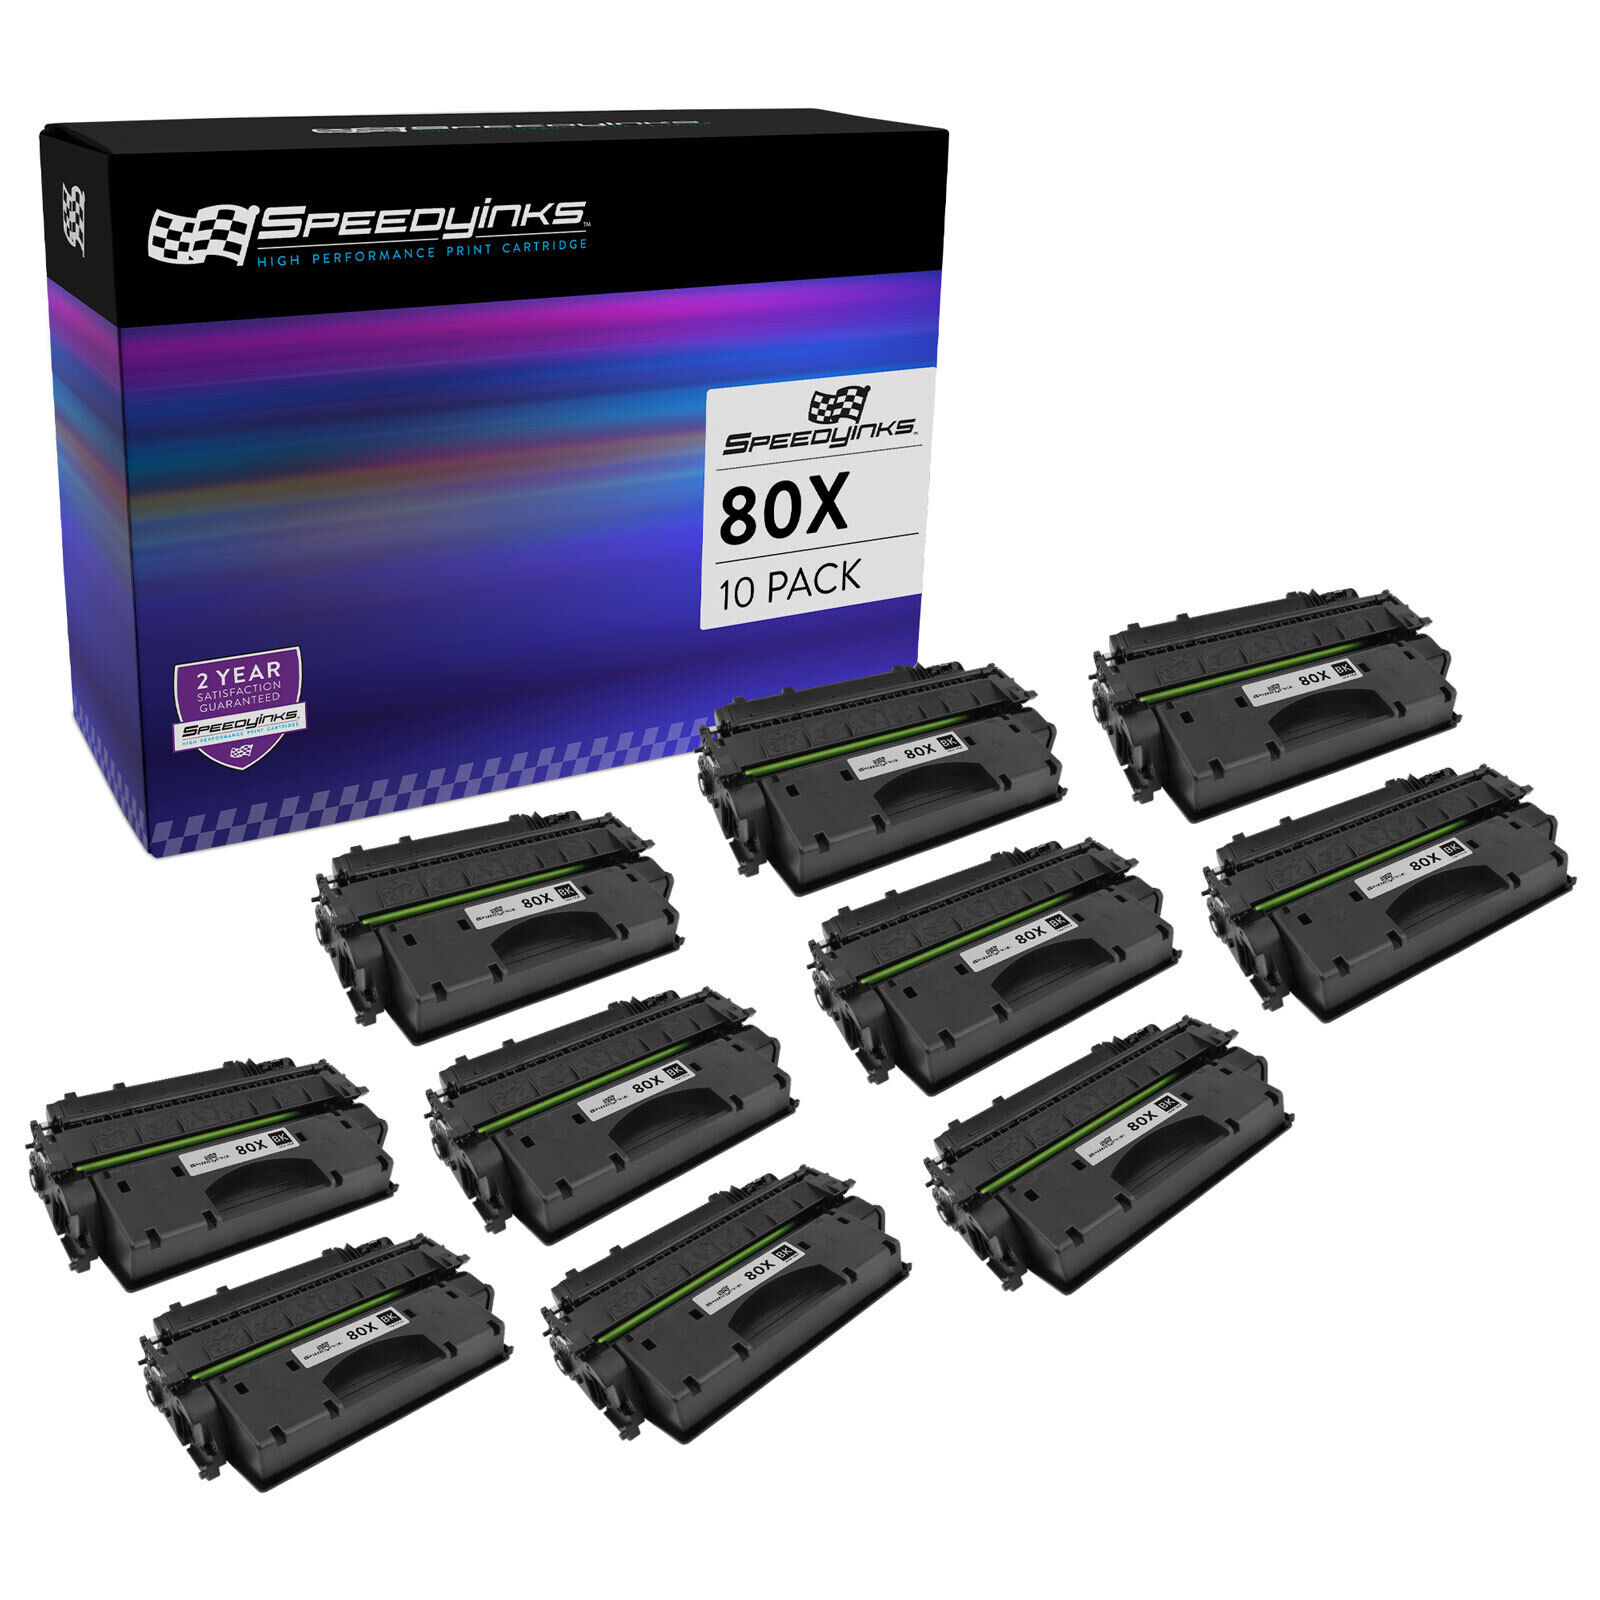 SPEEDYINKS Replacement HP 80X Toner Cartridge CF280X High Yield (Black, 10-Pack)